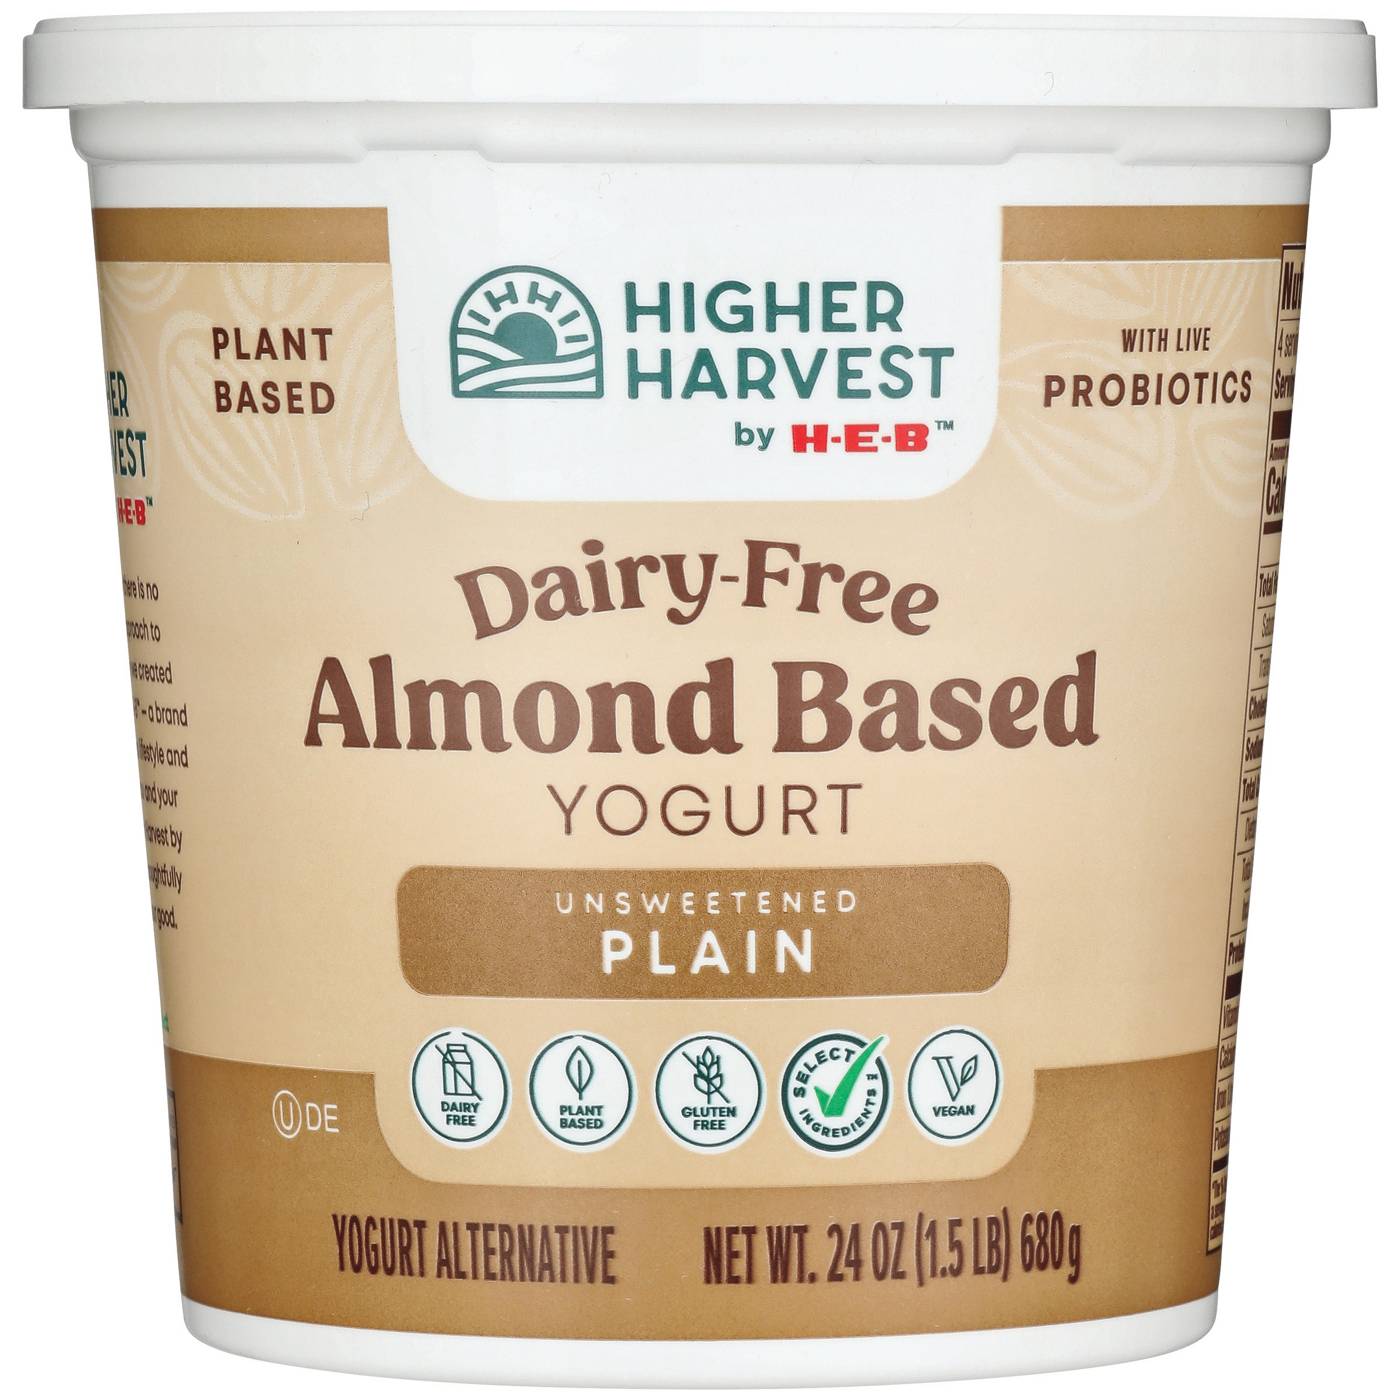 Higher Harvest by H-E-B Dairy-Free Almond-Based Yogurt – Unsweetened Plain; image 1 of 2